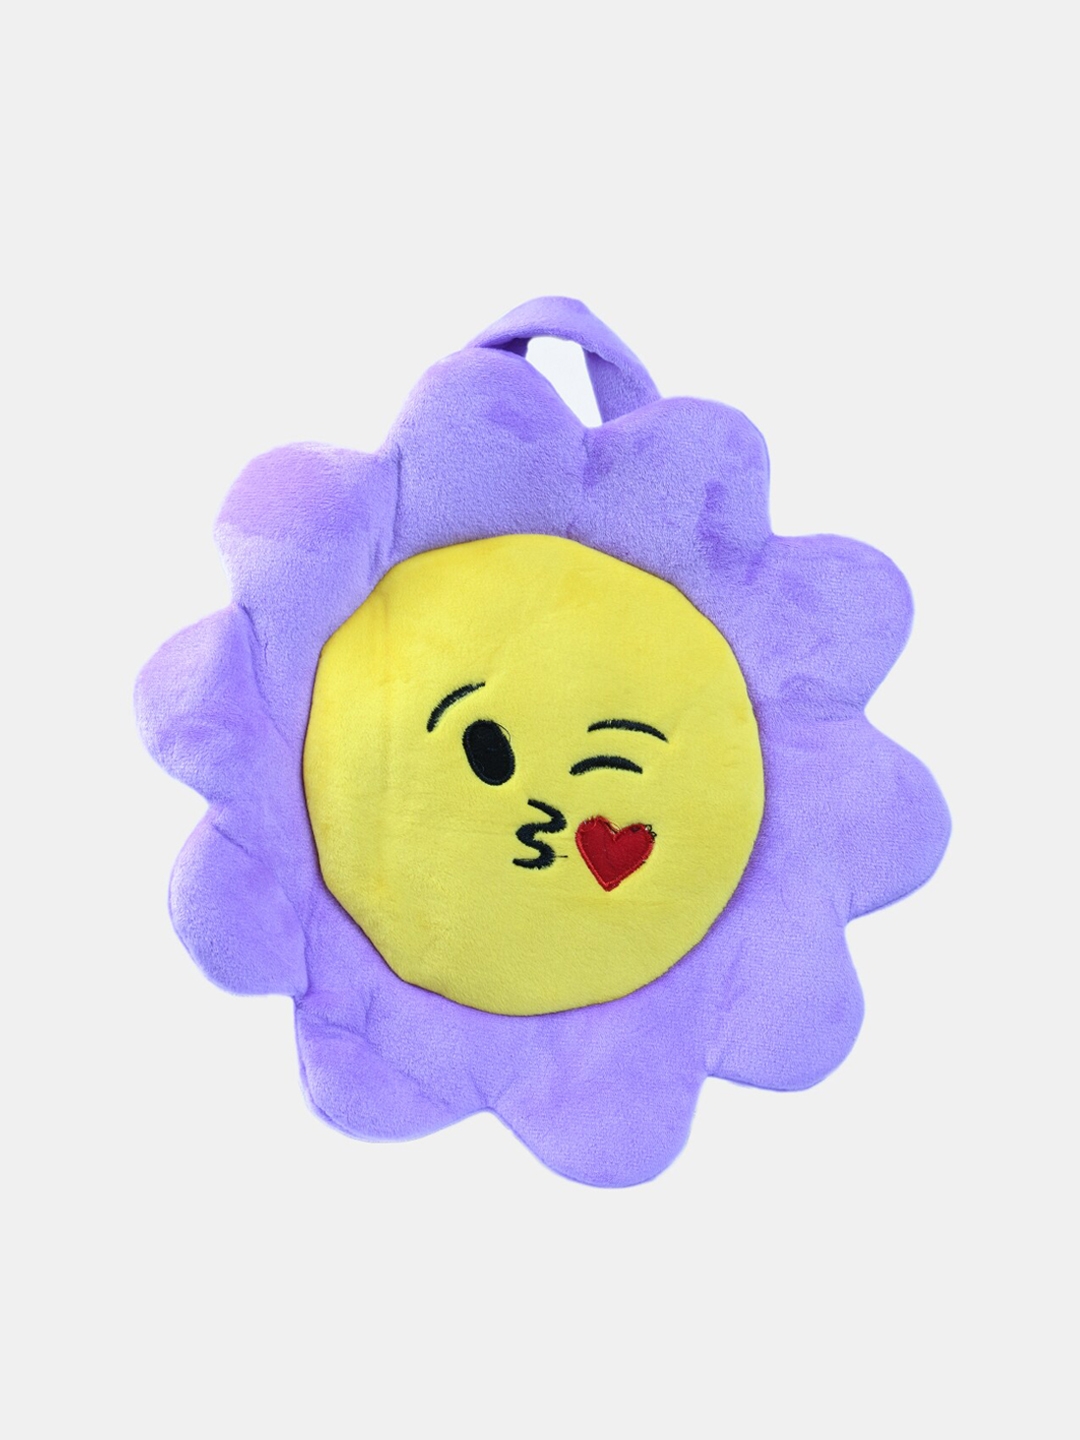 DukieKooky Unisex Kids Purple   Yellow Emoji Hand Bag Soft Toy  30 cm